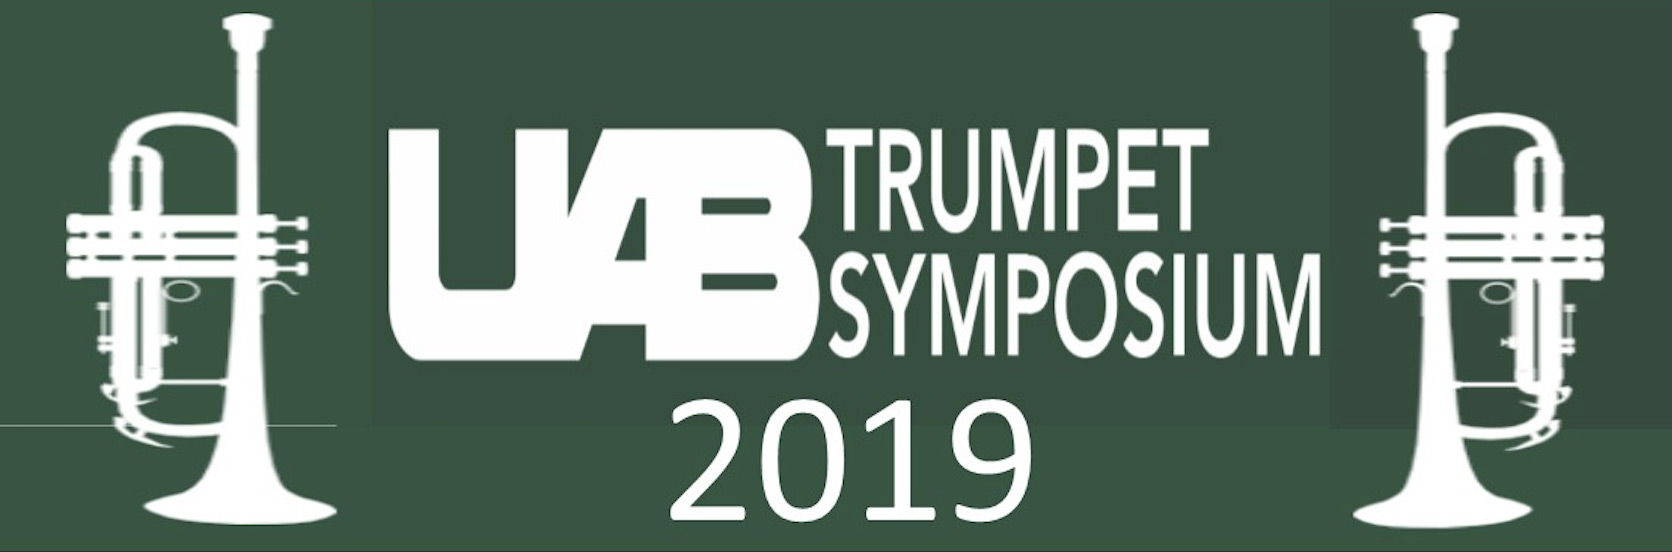 Trumpet Symposium event banner that improperly uses UAB monogram